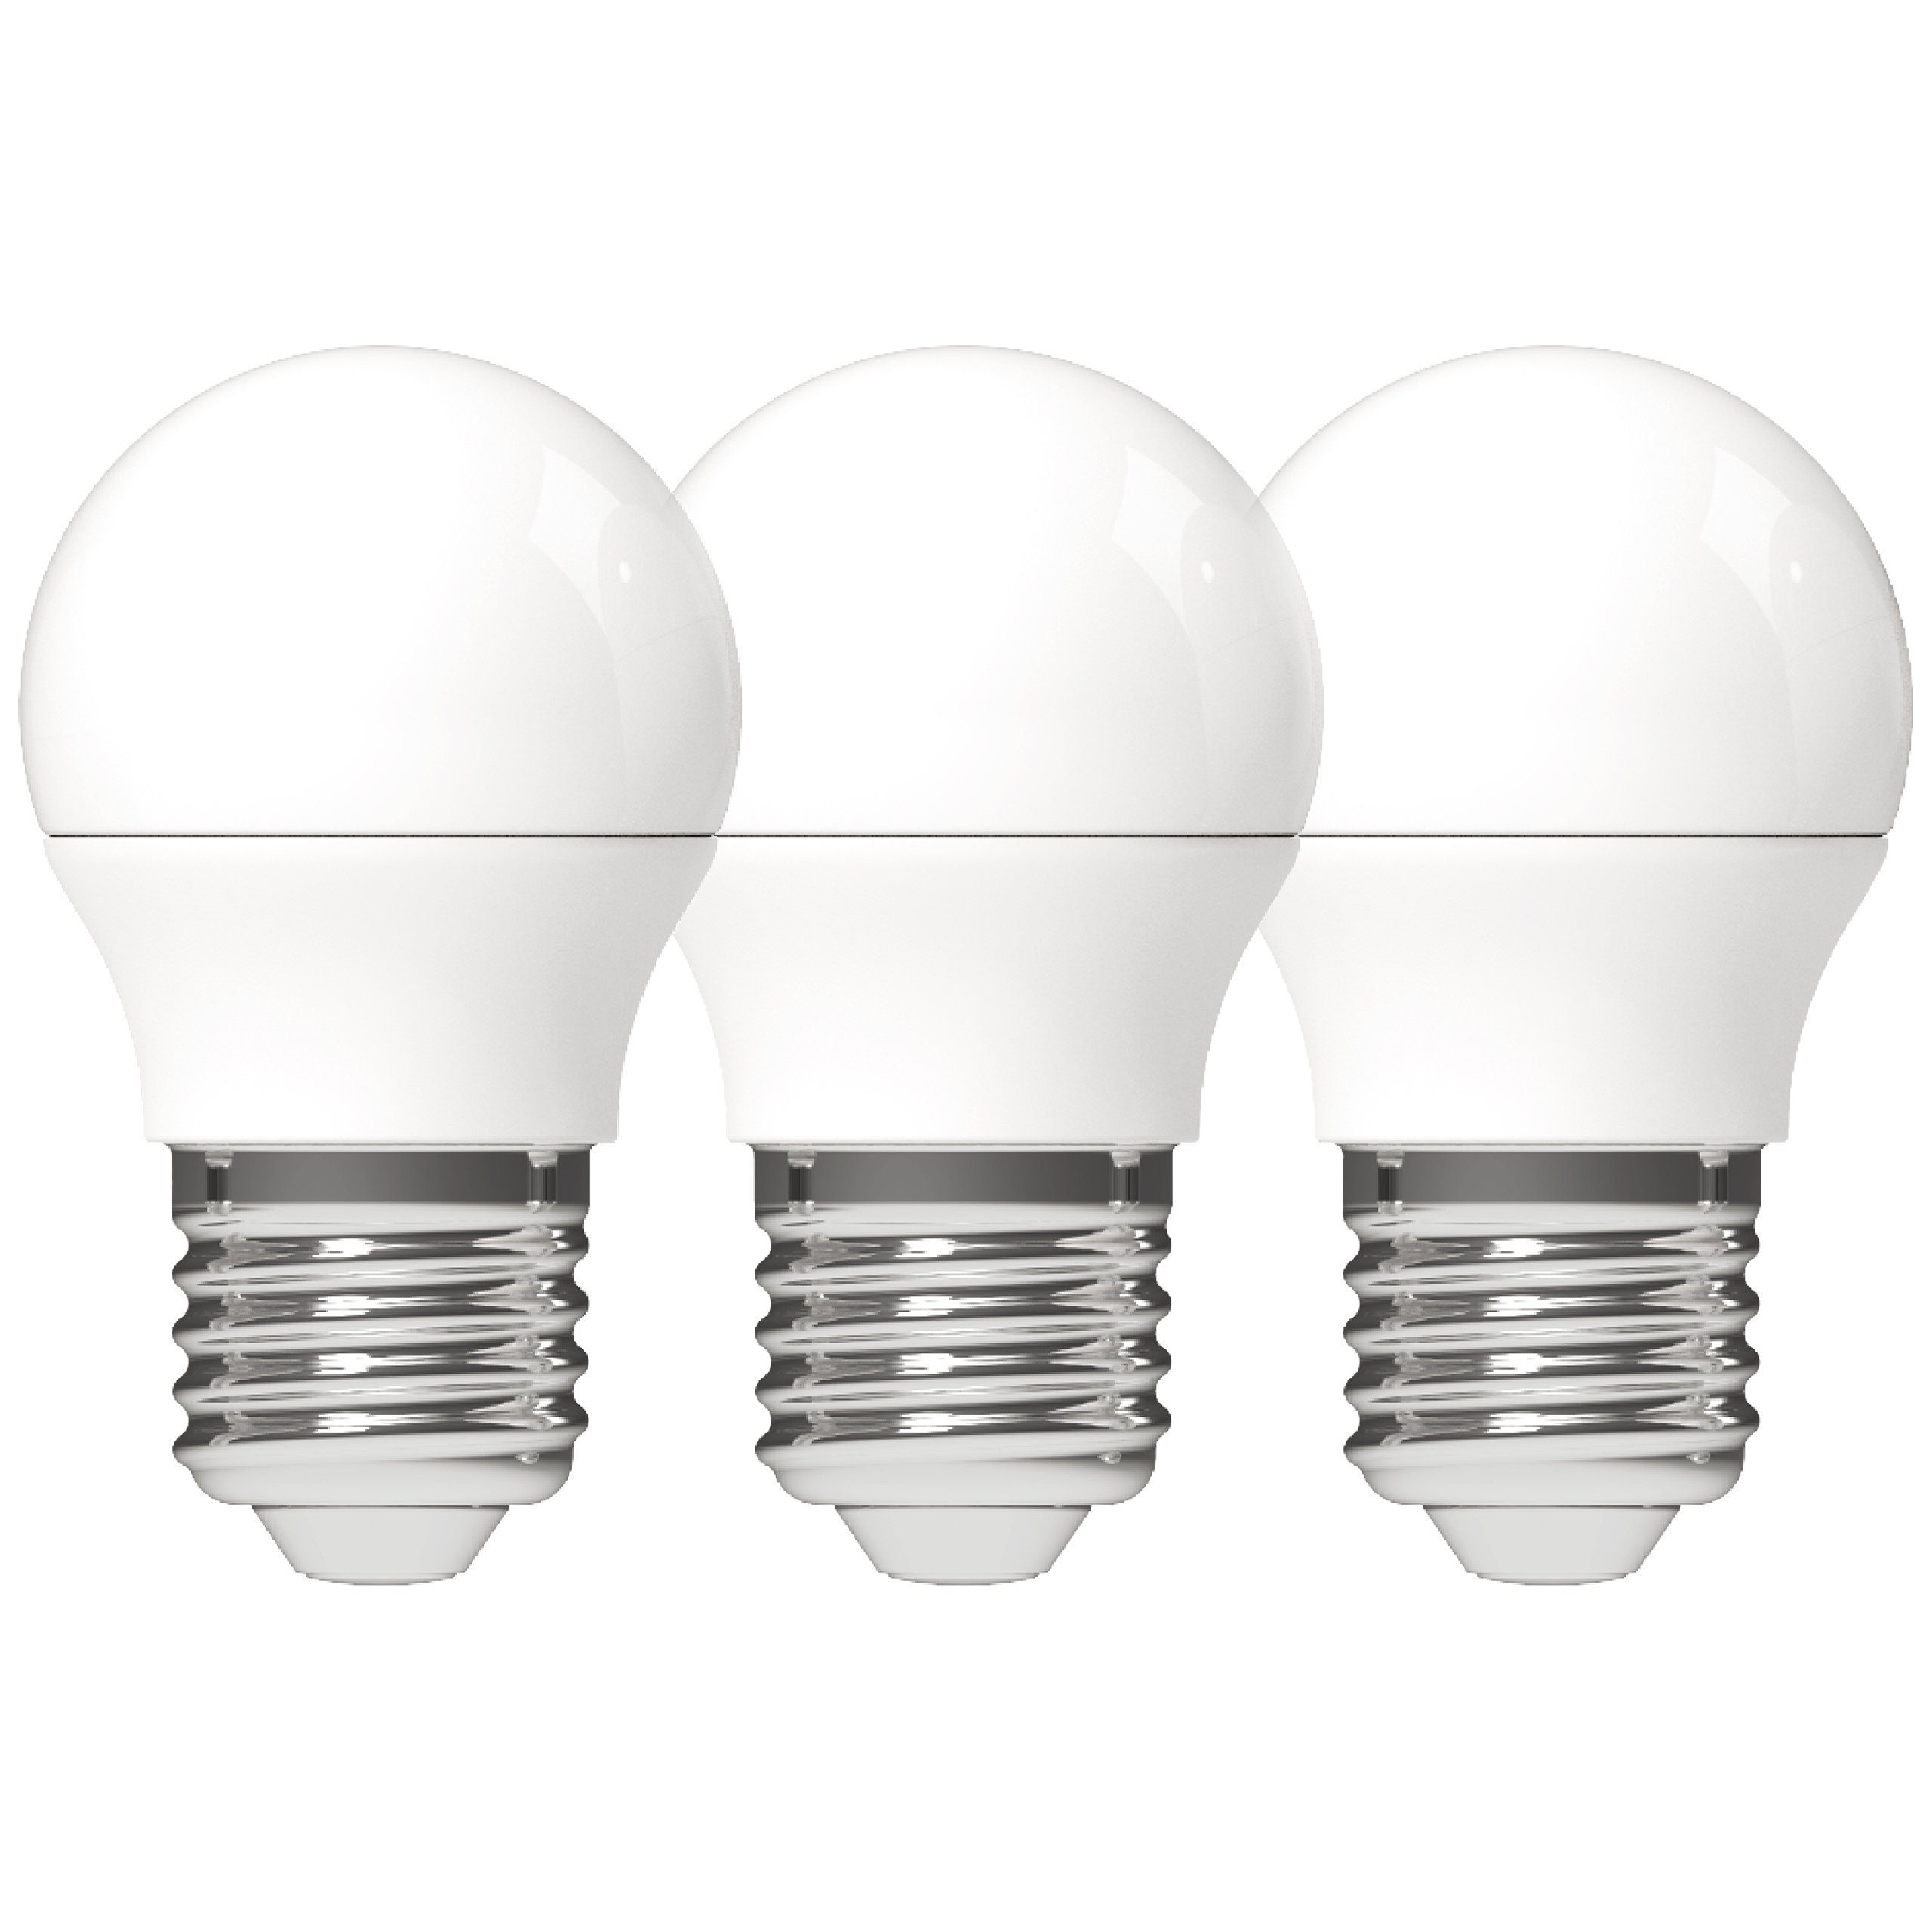 LED's light LED-Leuchtmittel 0620178 LED Kugel, E27, E27 4,9W warmweiß Opal G45 3-Pack